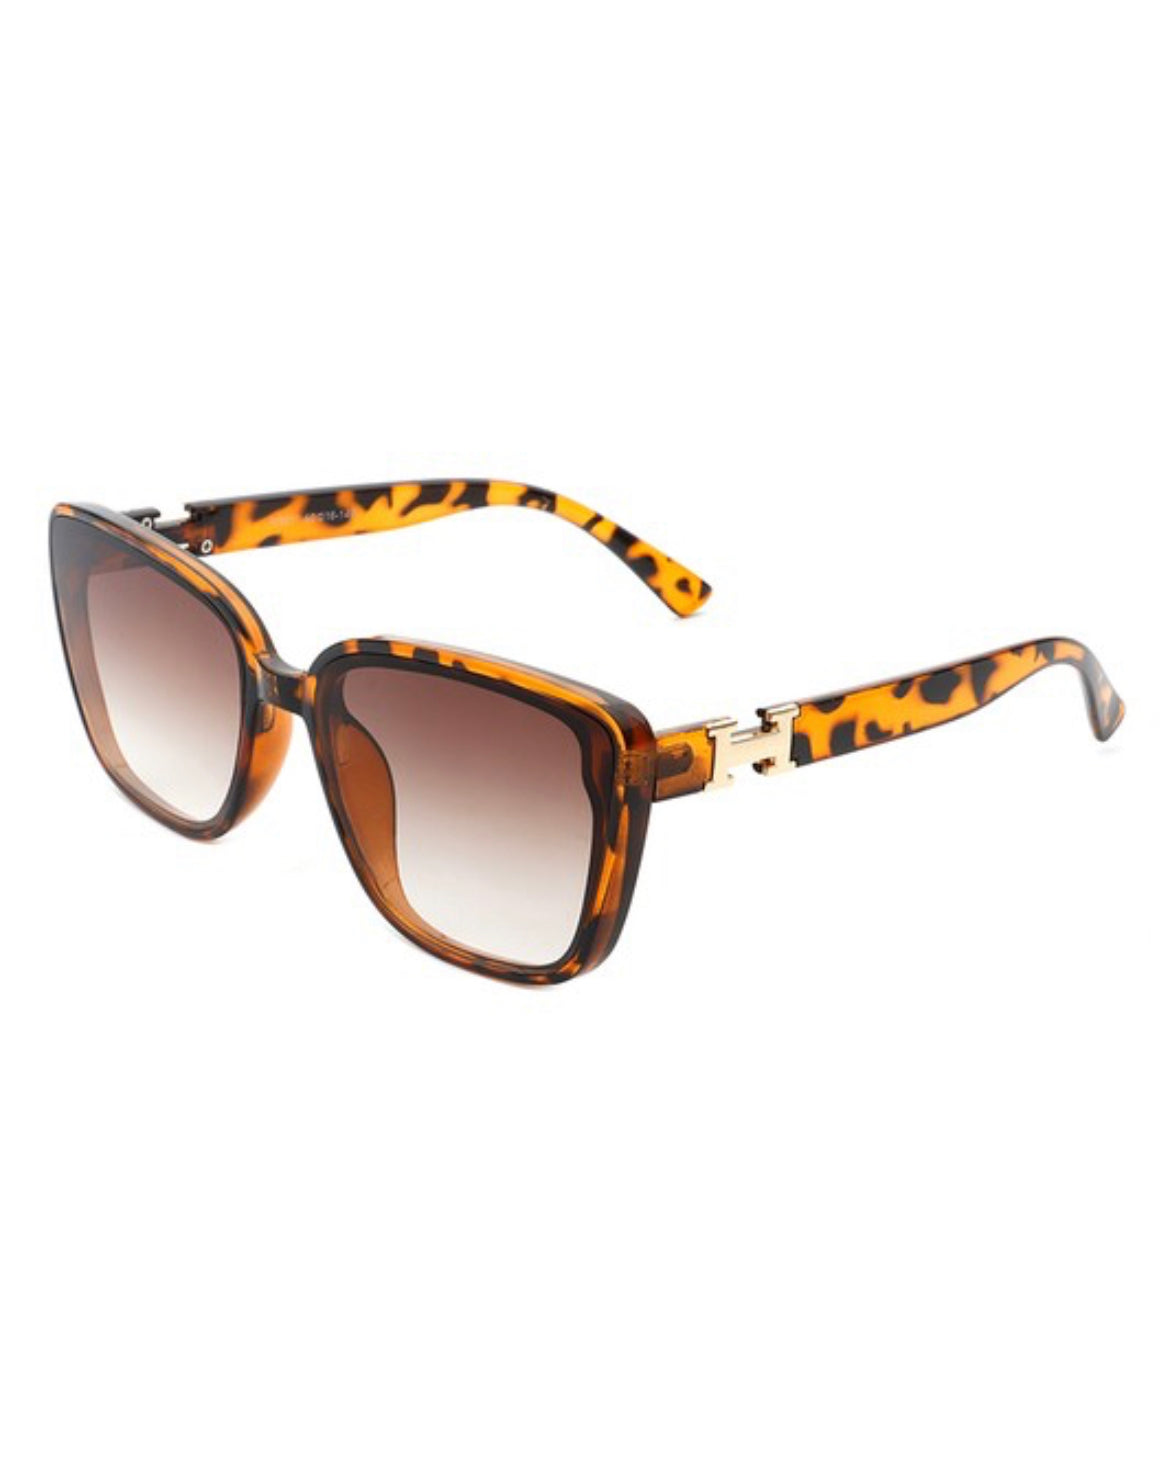 Hot Girl Summer Square Sunglasses